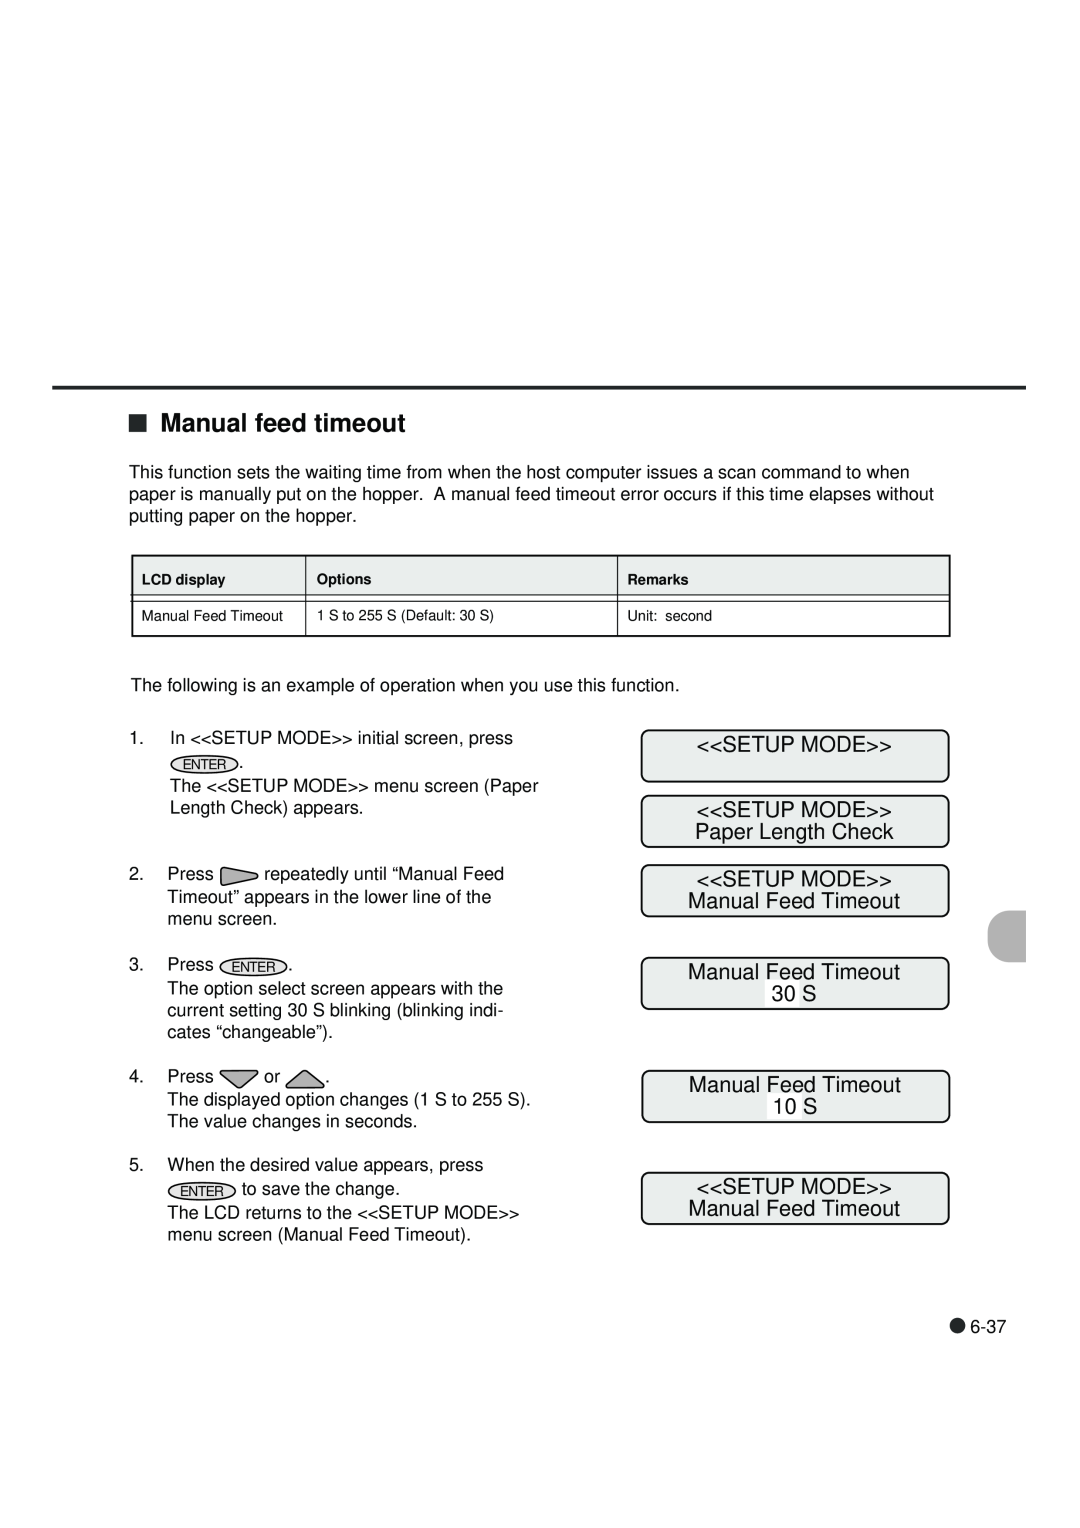 Fujitsu fi-4990C Manual feed timeout, SETUP MODE Manual Feed Timeout Manual Feed Timeout 30 S, S to 255 S Default 30 S 